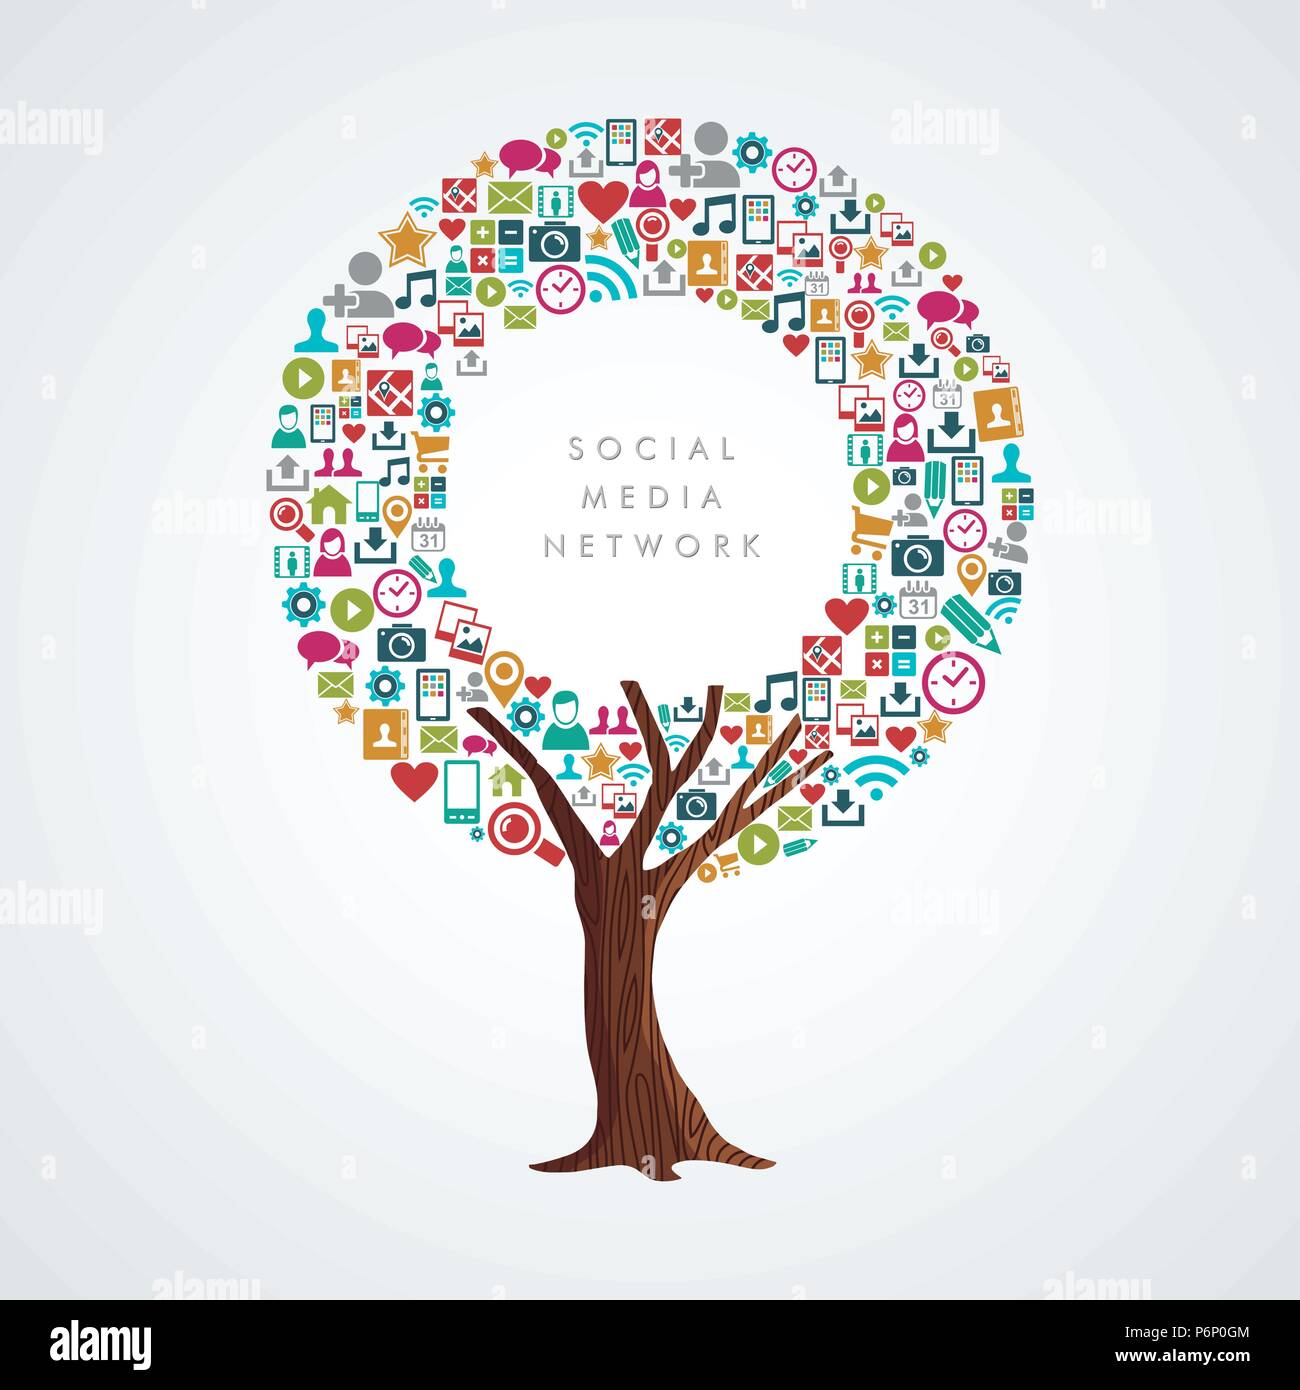 Baum mit Social Media App Icons. Konzept Abbildung über Netzwerk Kommunikation, Internet Projekt oder On-line-Geschäft. EPS 10 Vektor. Stock Vektor